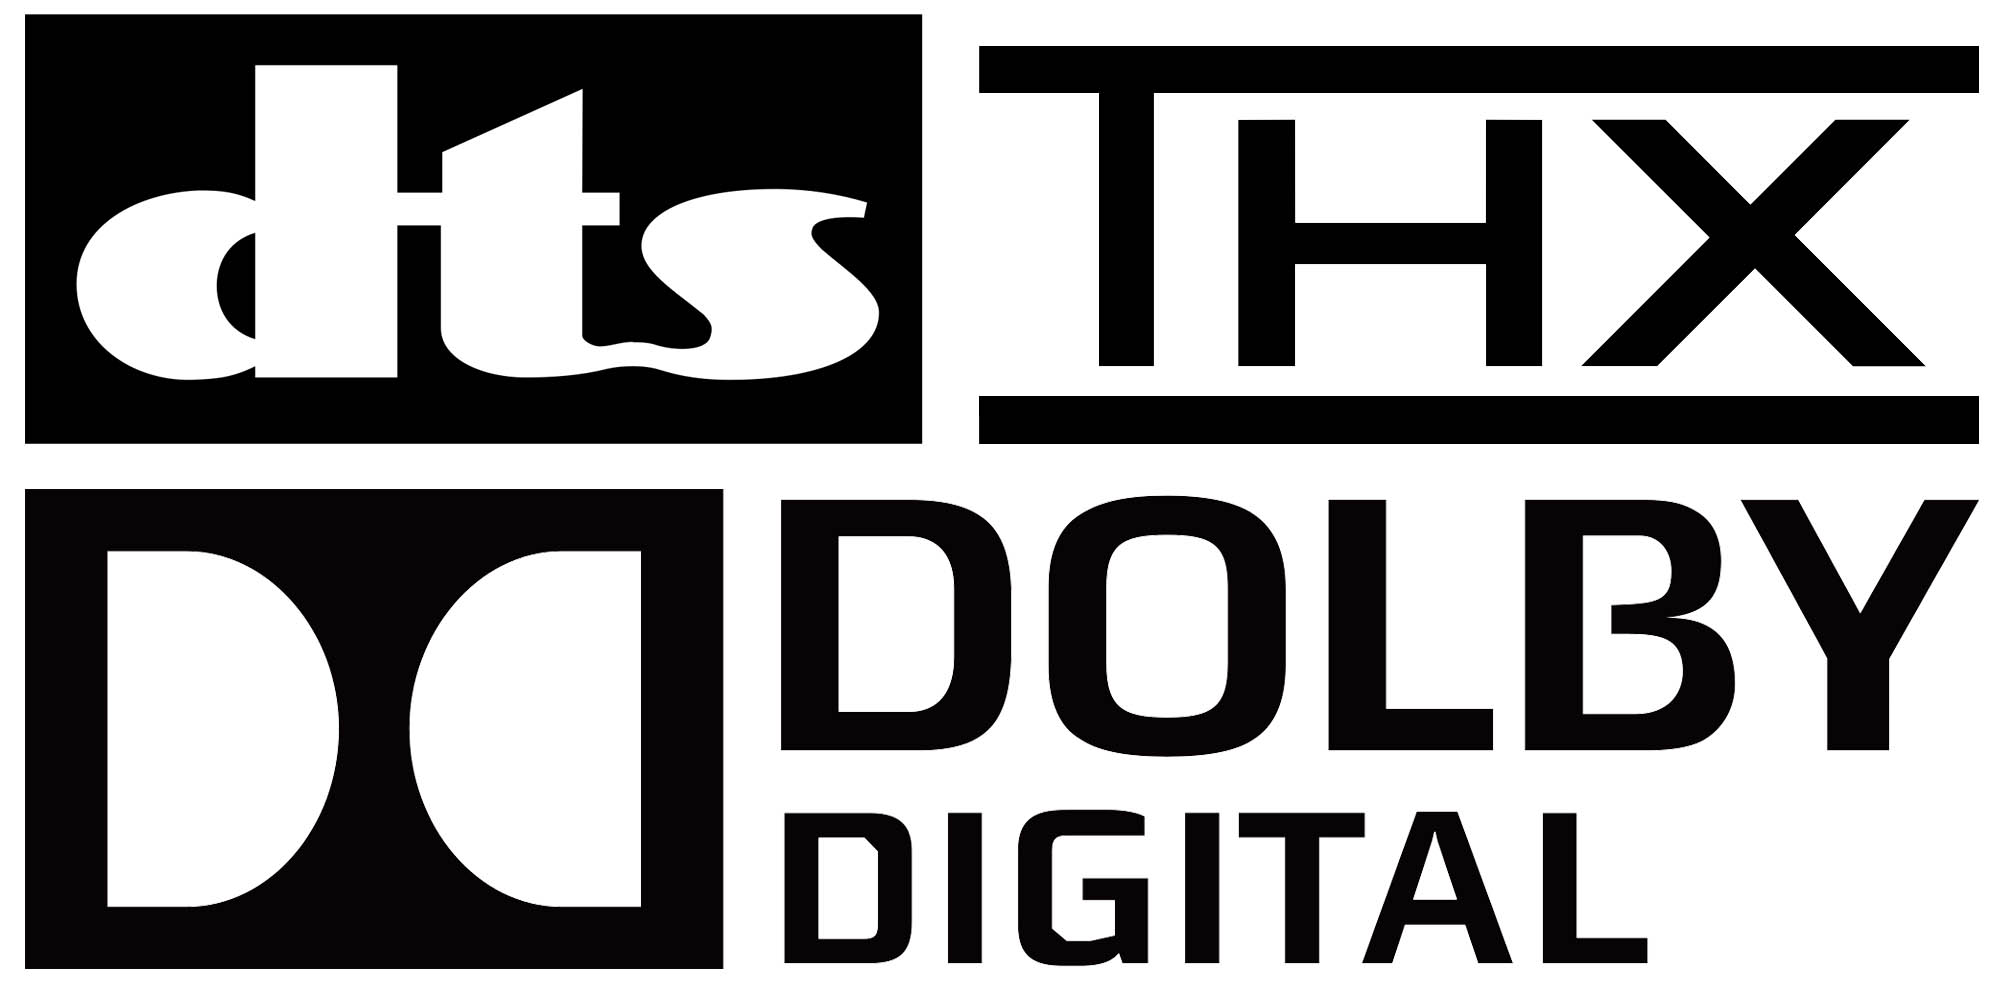 DTS THX Dolby Digital logos